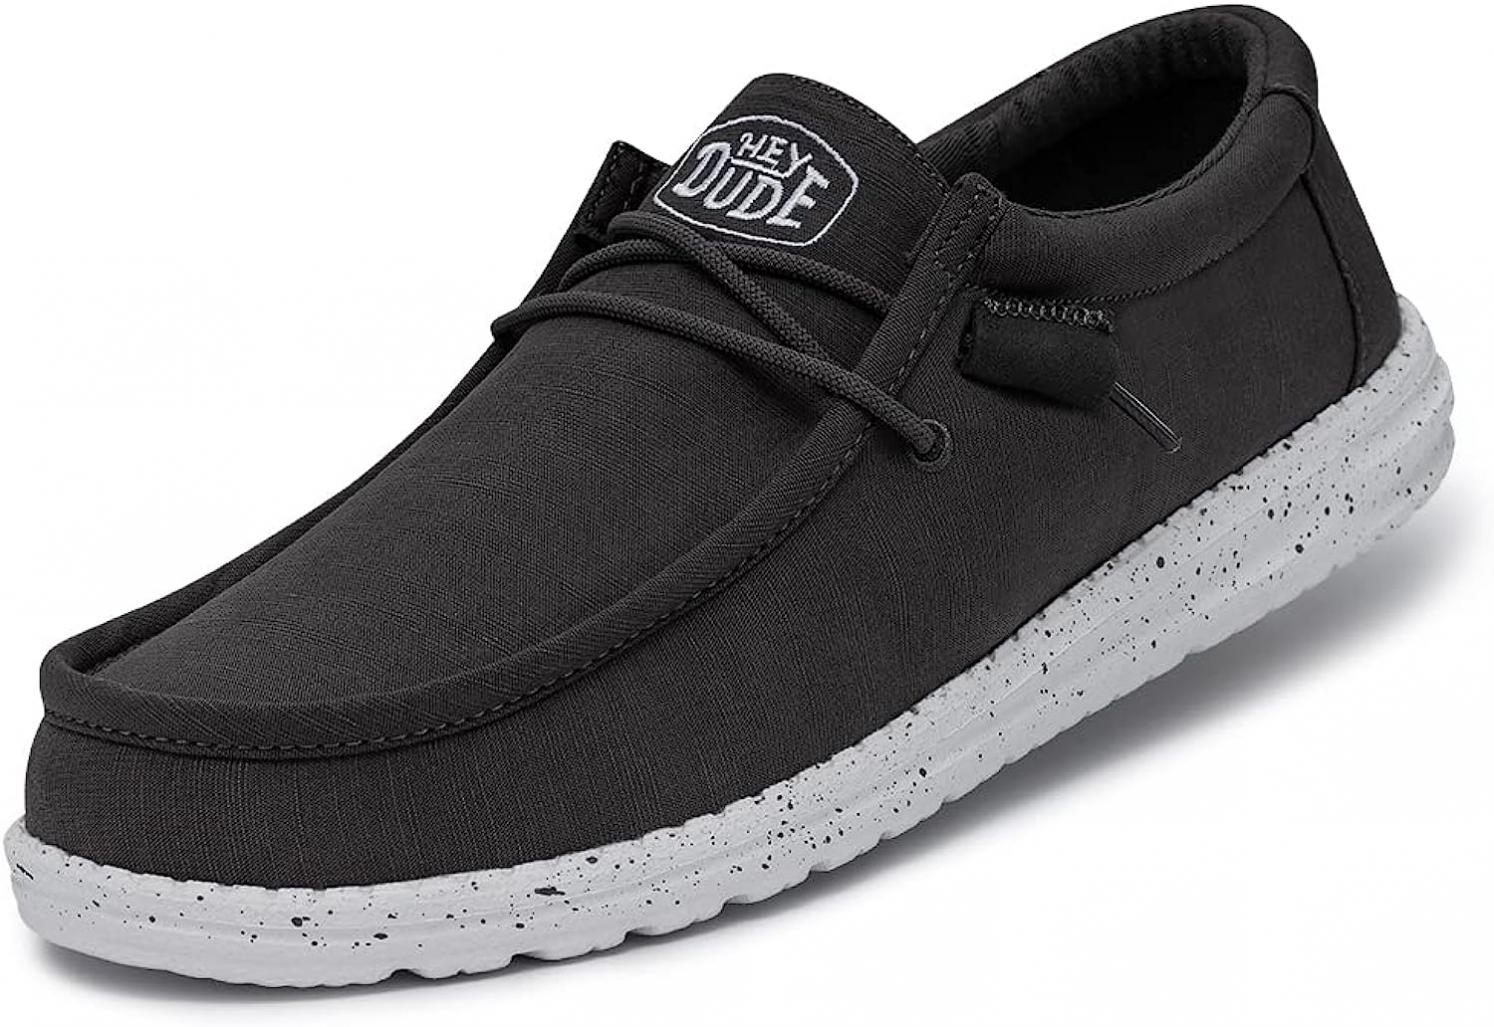 Hey Dude Men's Wally Slub Canvas Dark Grey Size 11| Men's Loafers | Men's Slip On Shoes | Comfortable & Light-Weight